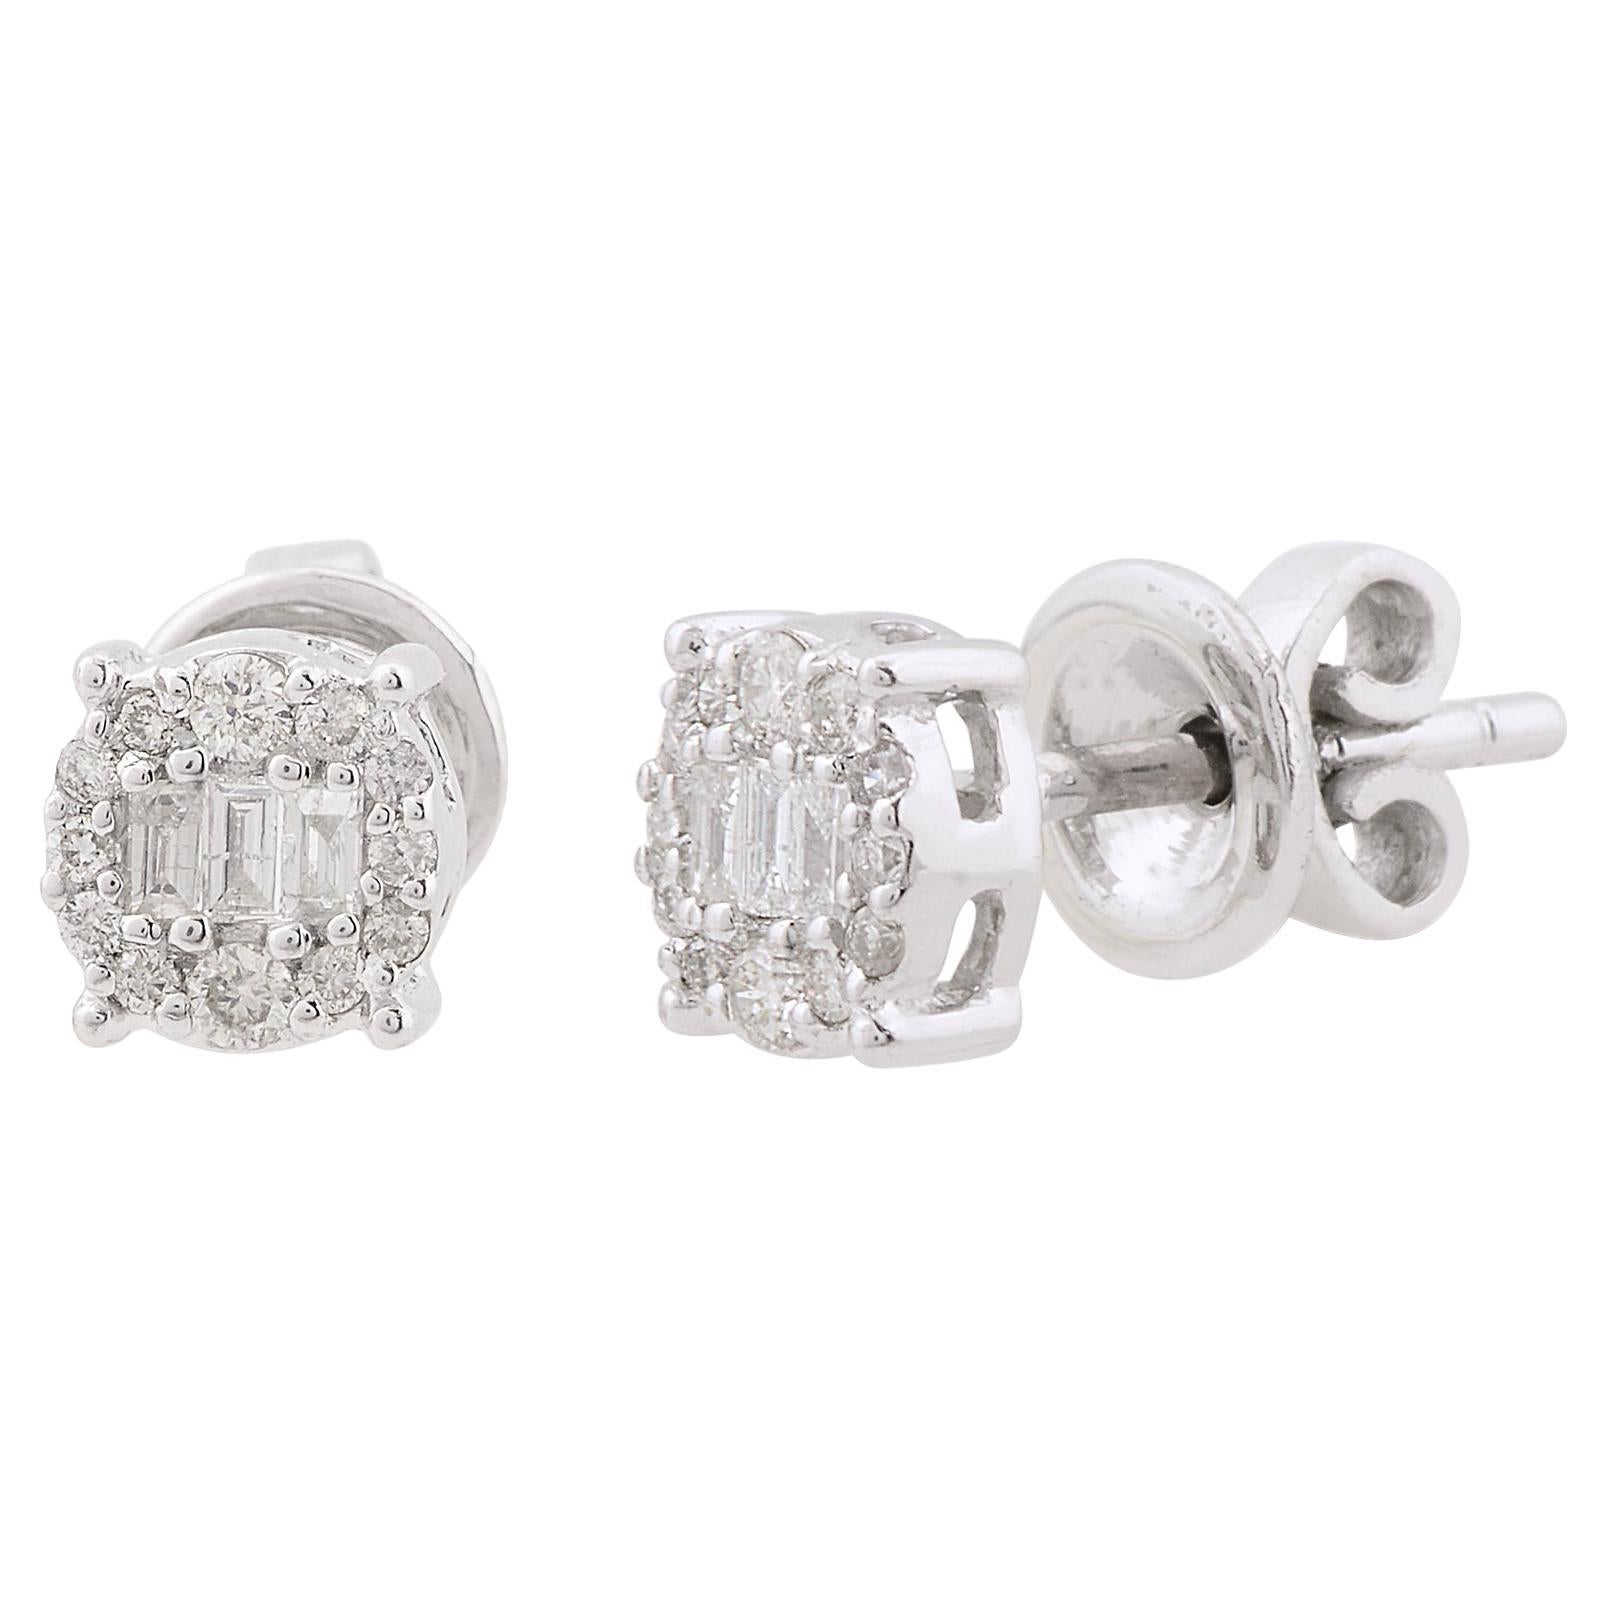 Clous d'oreilles minimalistes en or blanc 10 carats avec diamants baguettes naturels de 0,23 carat